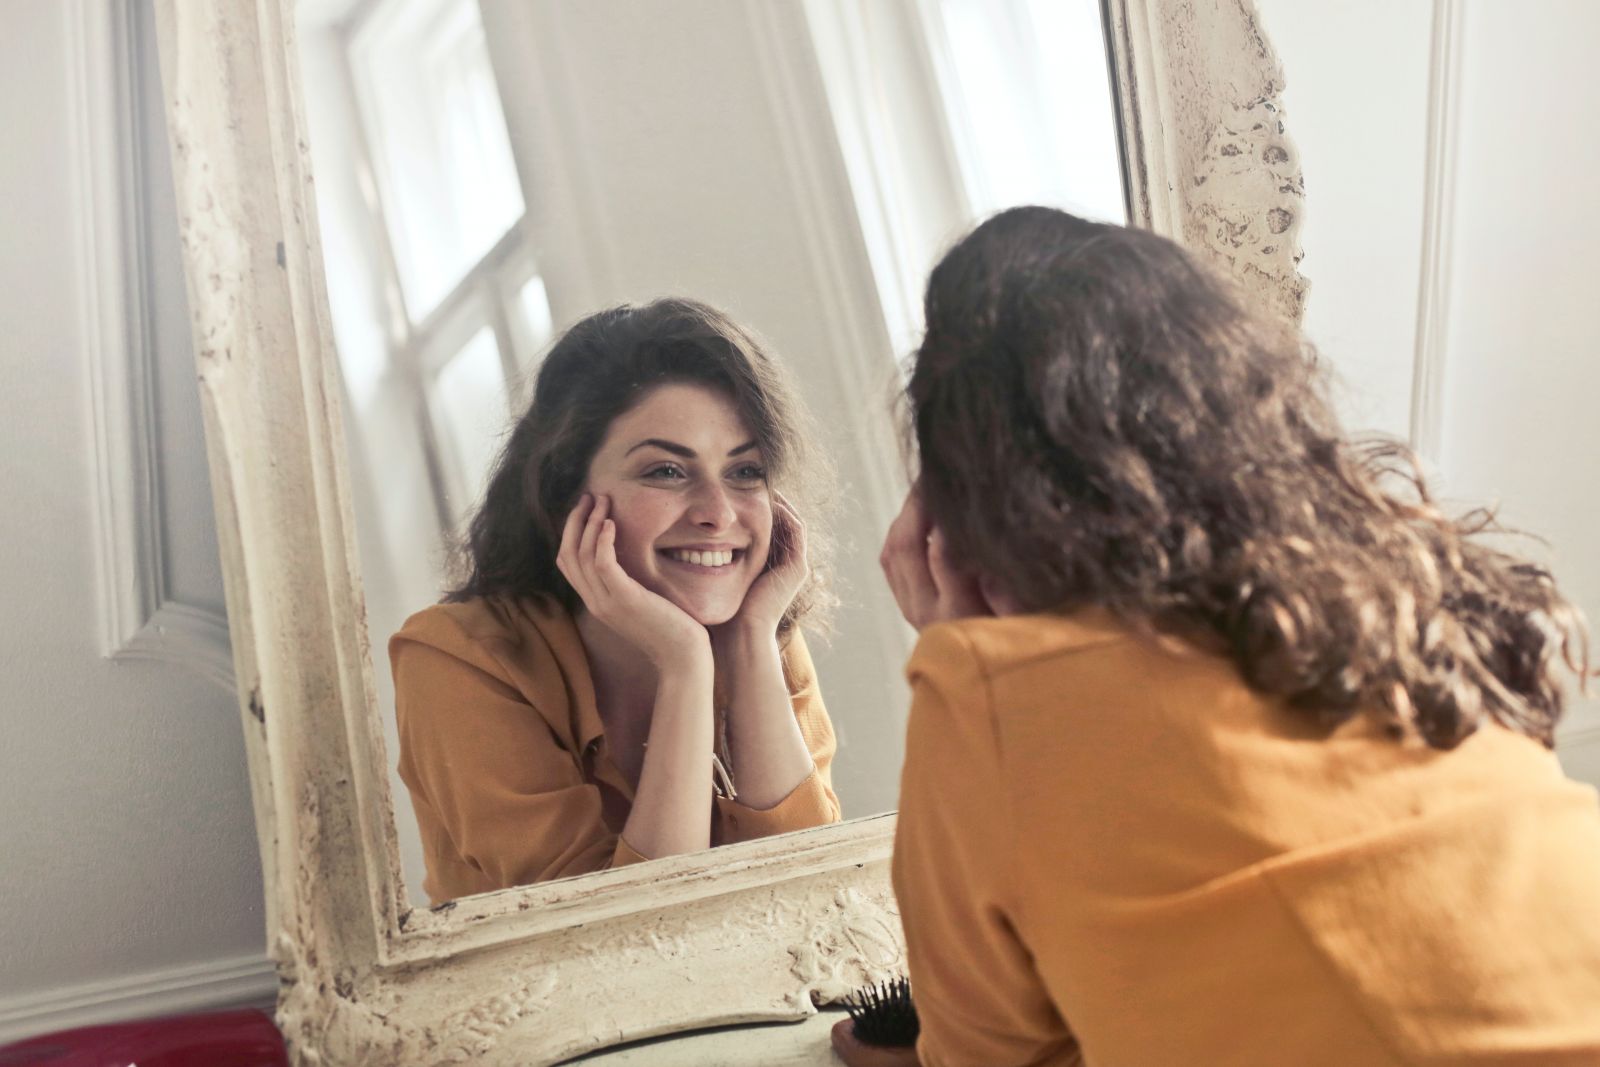 Women admiring her own bright white smile in mirror